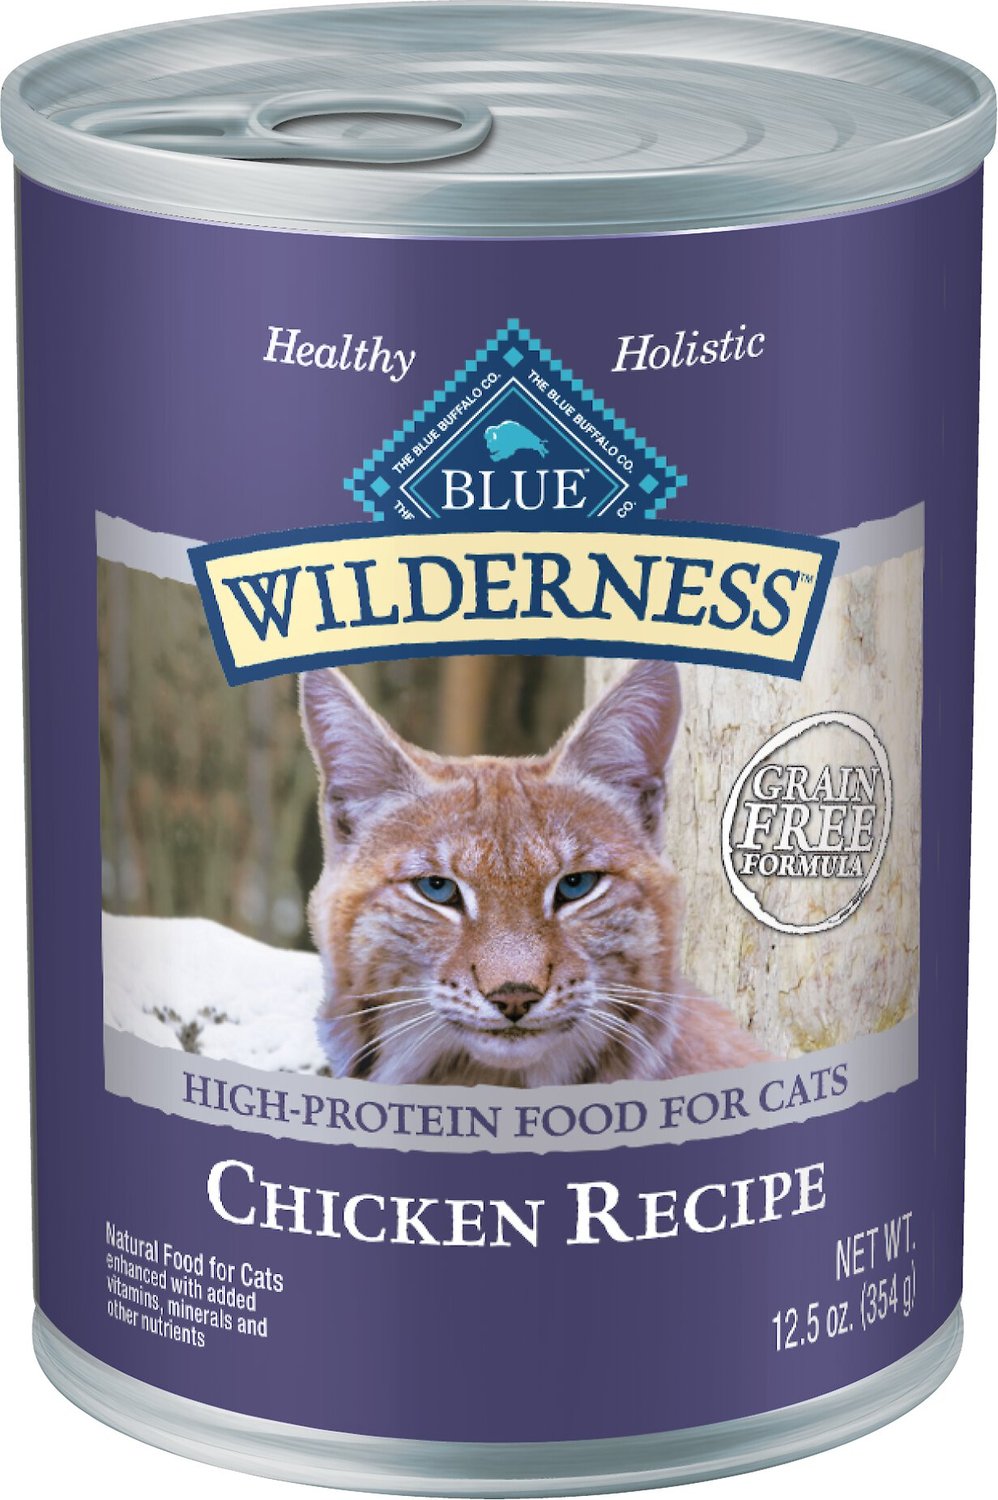 Blue Buffalo Cat Food Feeding Chart